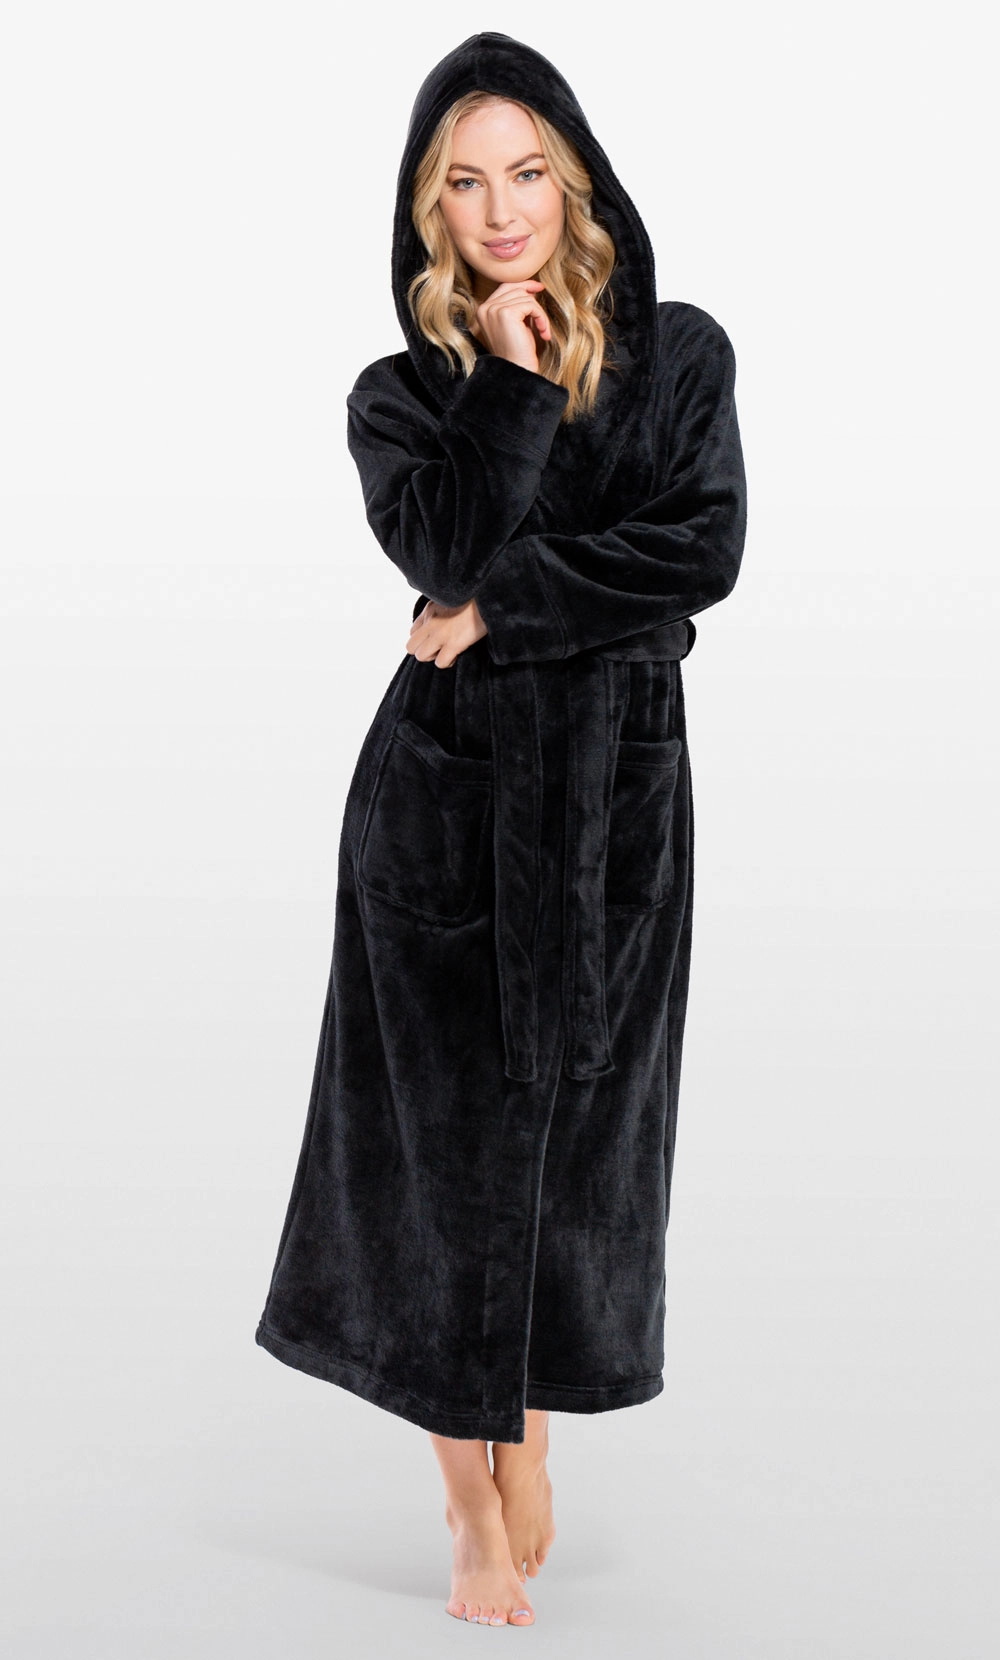 https://robemart.com/images/thumbnails/detailed/8/Women's-Plush-Black-Soft-Warm-Fleece-Bathrobe-with-Hood-Comfy-Womens-frontt.webp